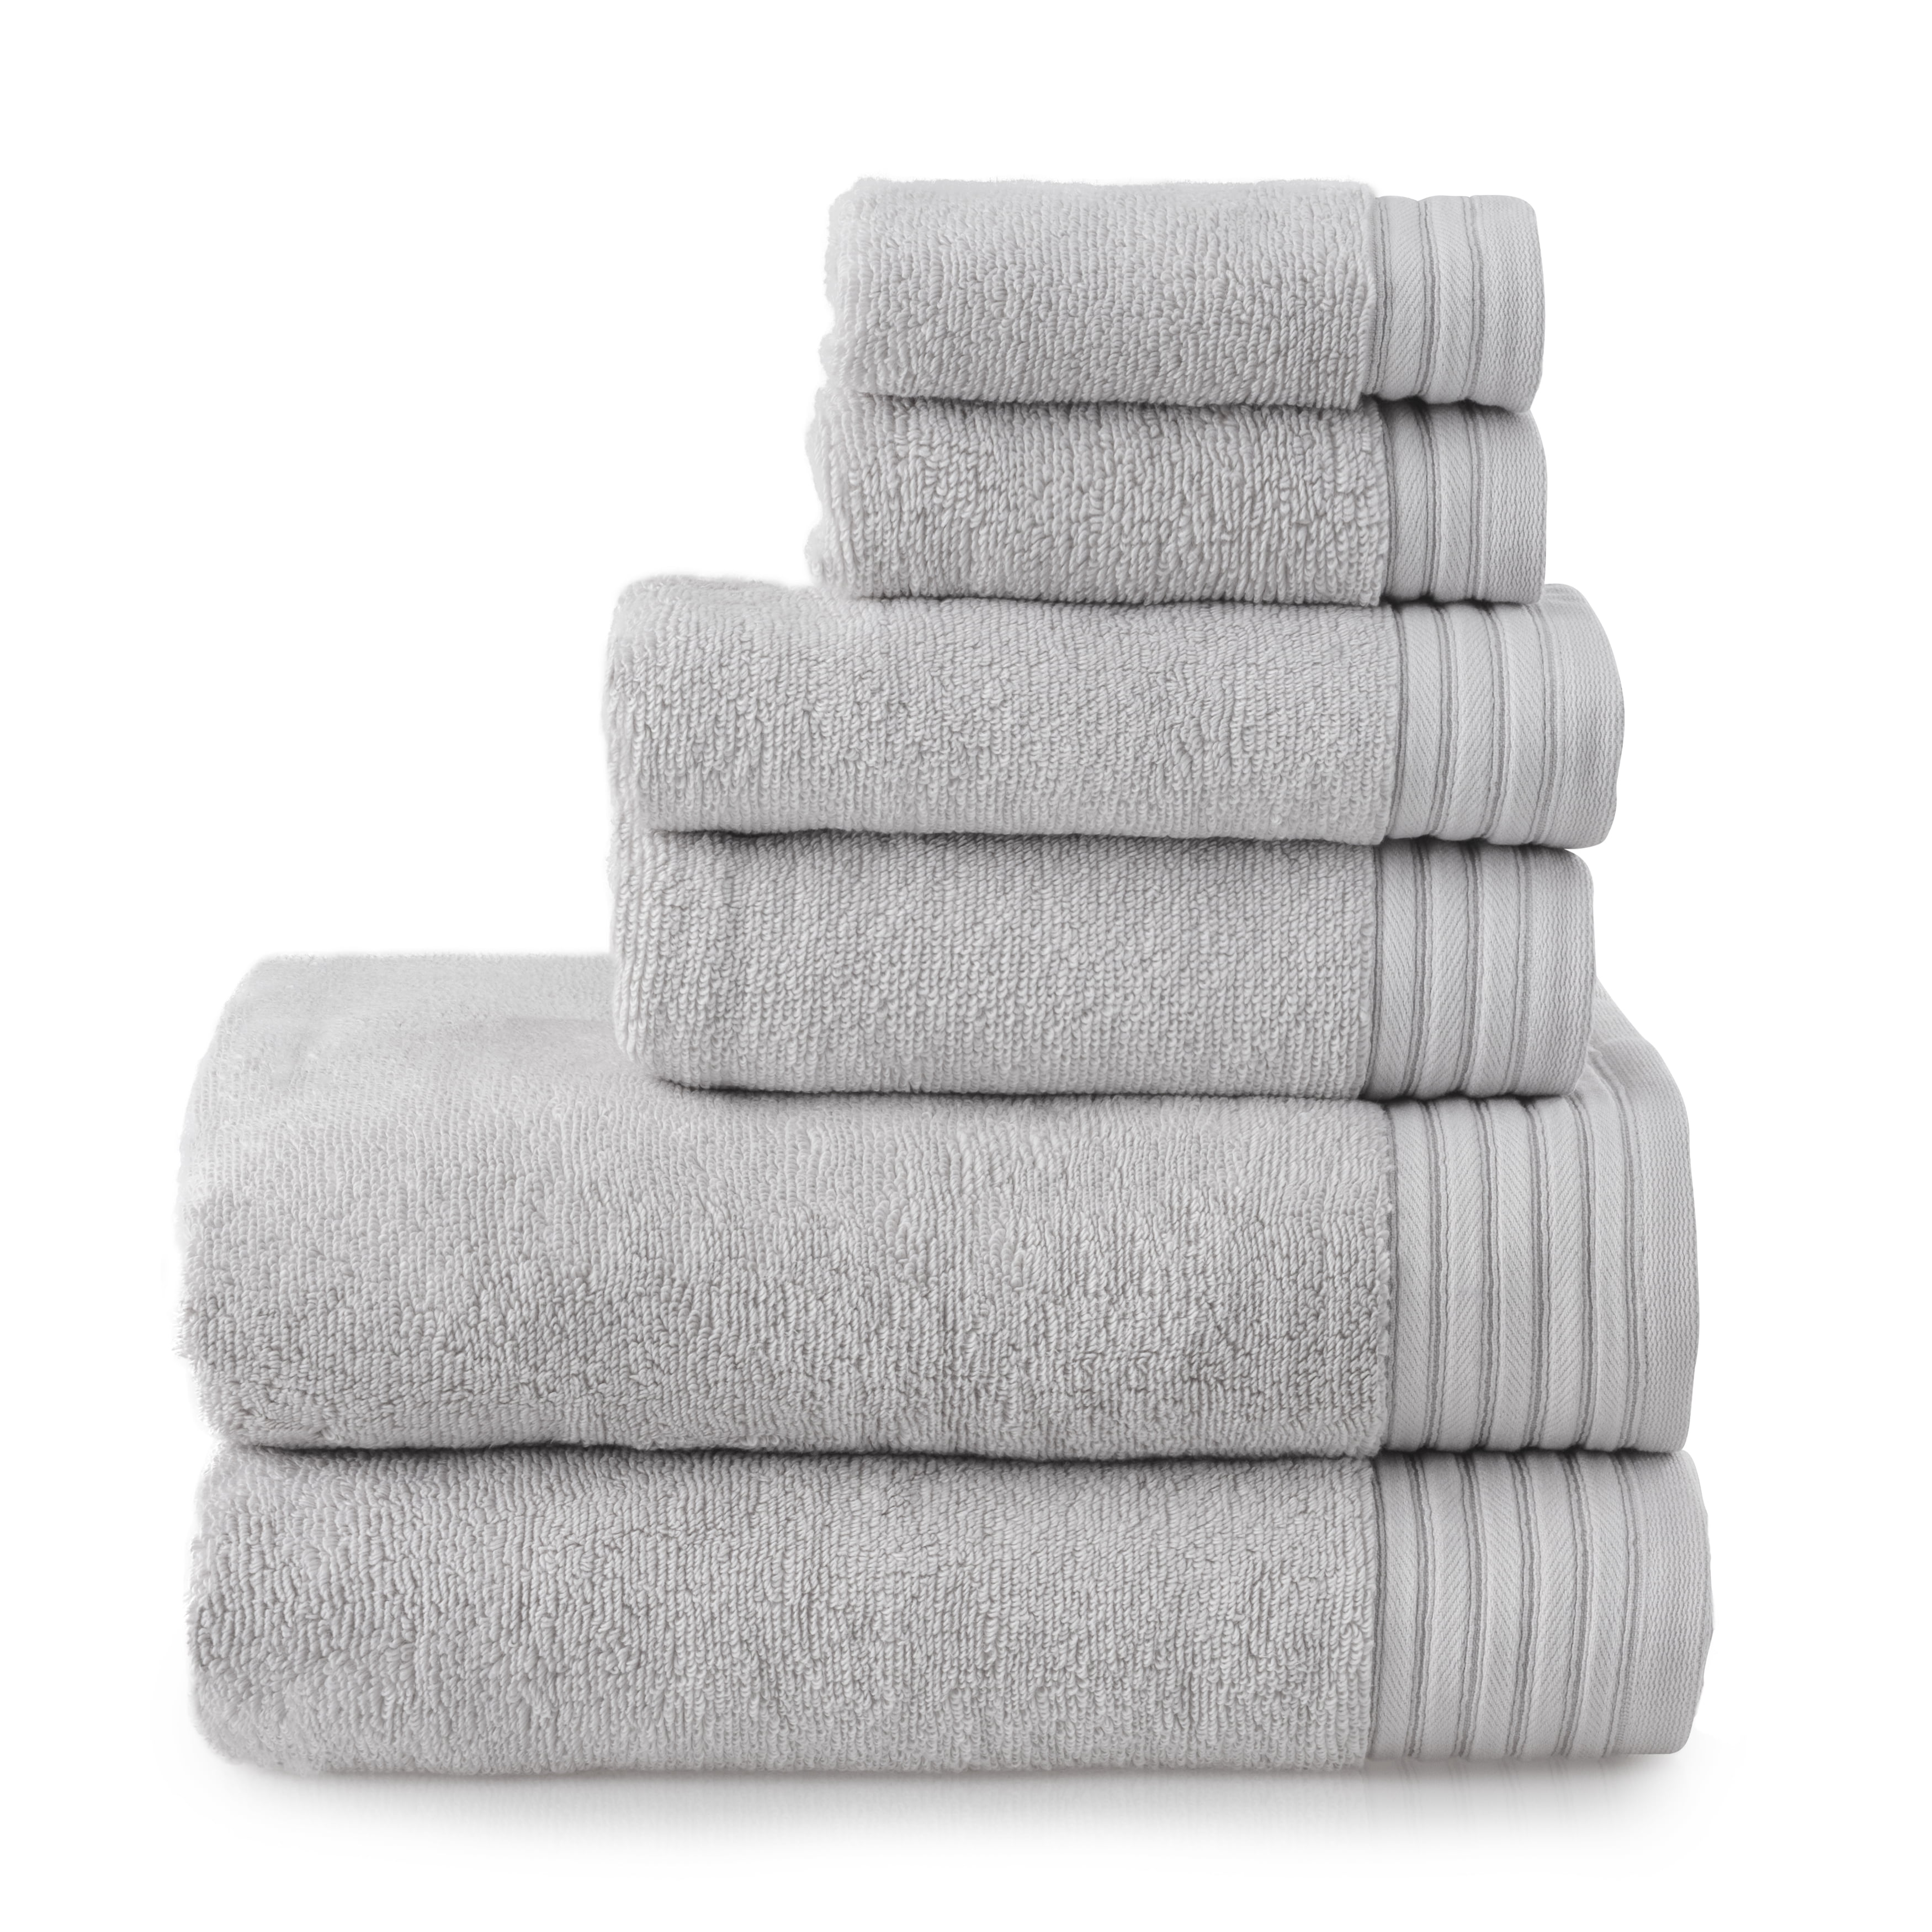 Overlook Hotel Bath Towels  Custo Horror Towels 